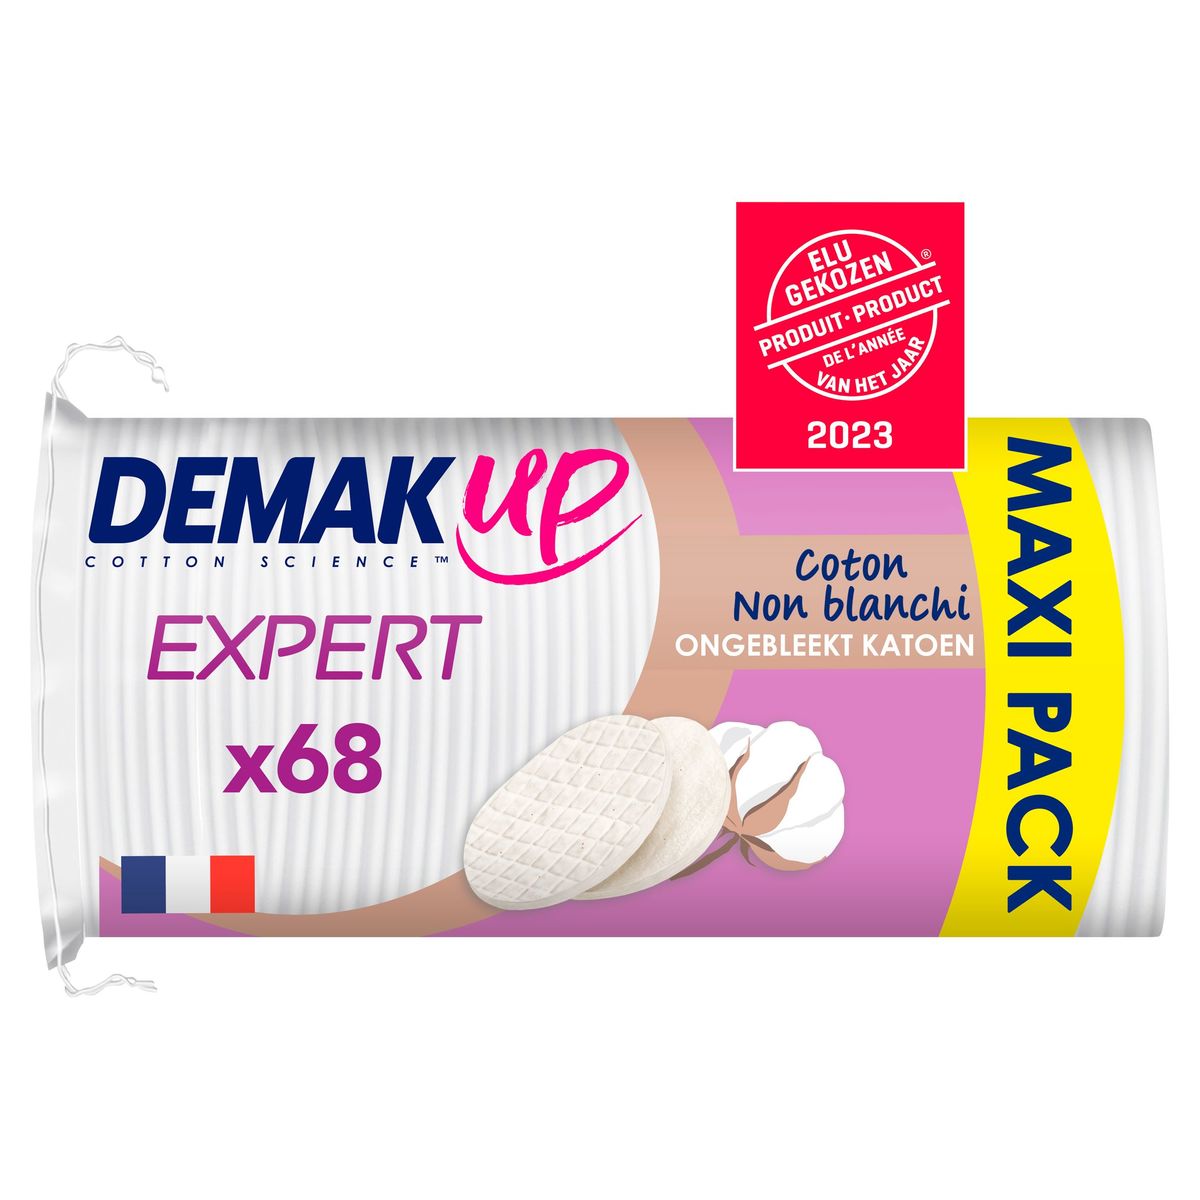 Demak'Up Expert Démaquillage Ultra-Efficace Maxi Pack 68 Pièces